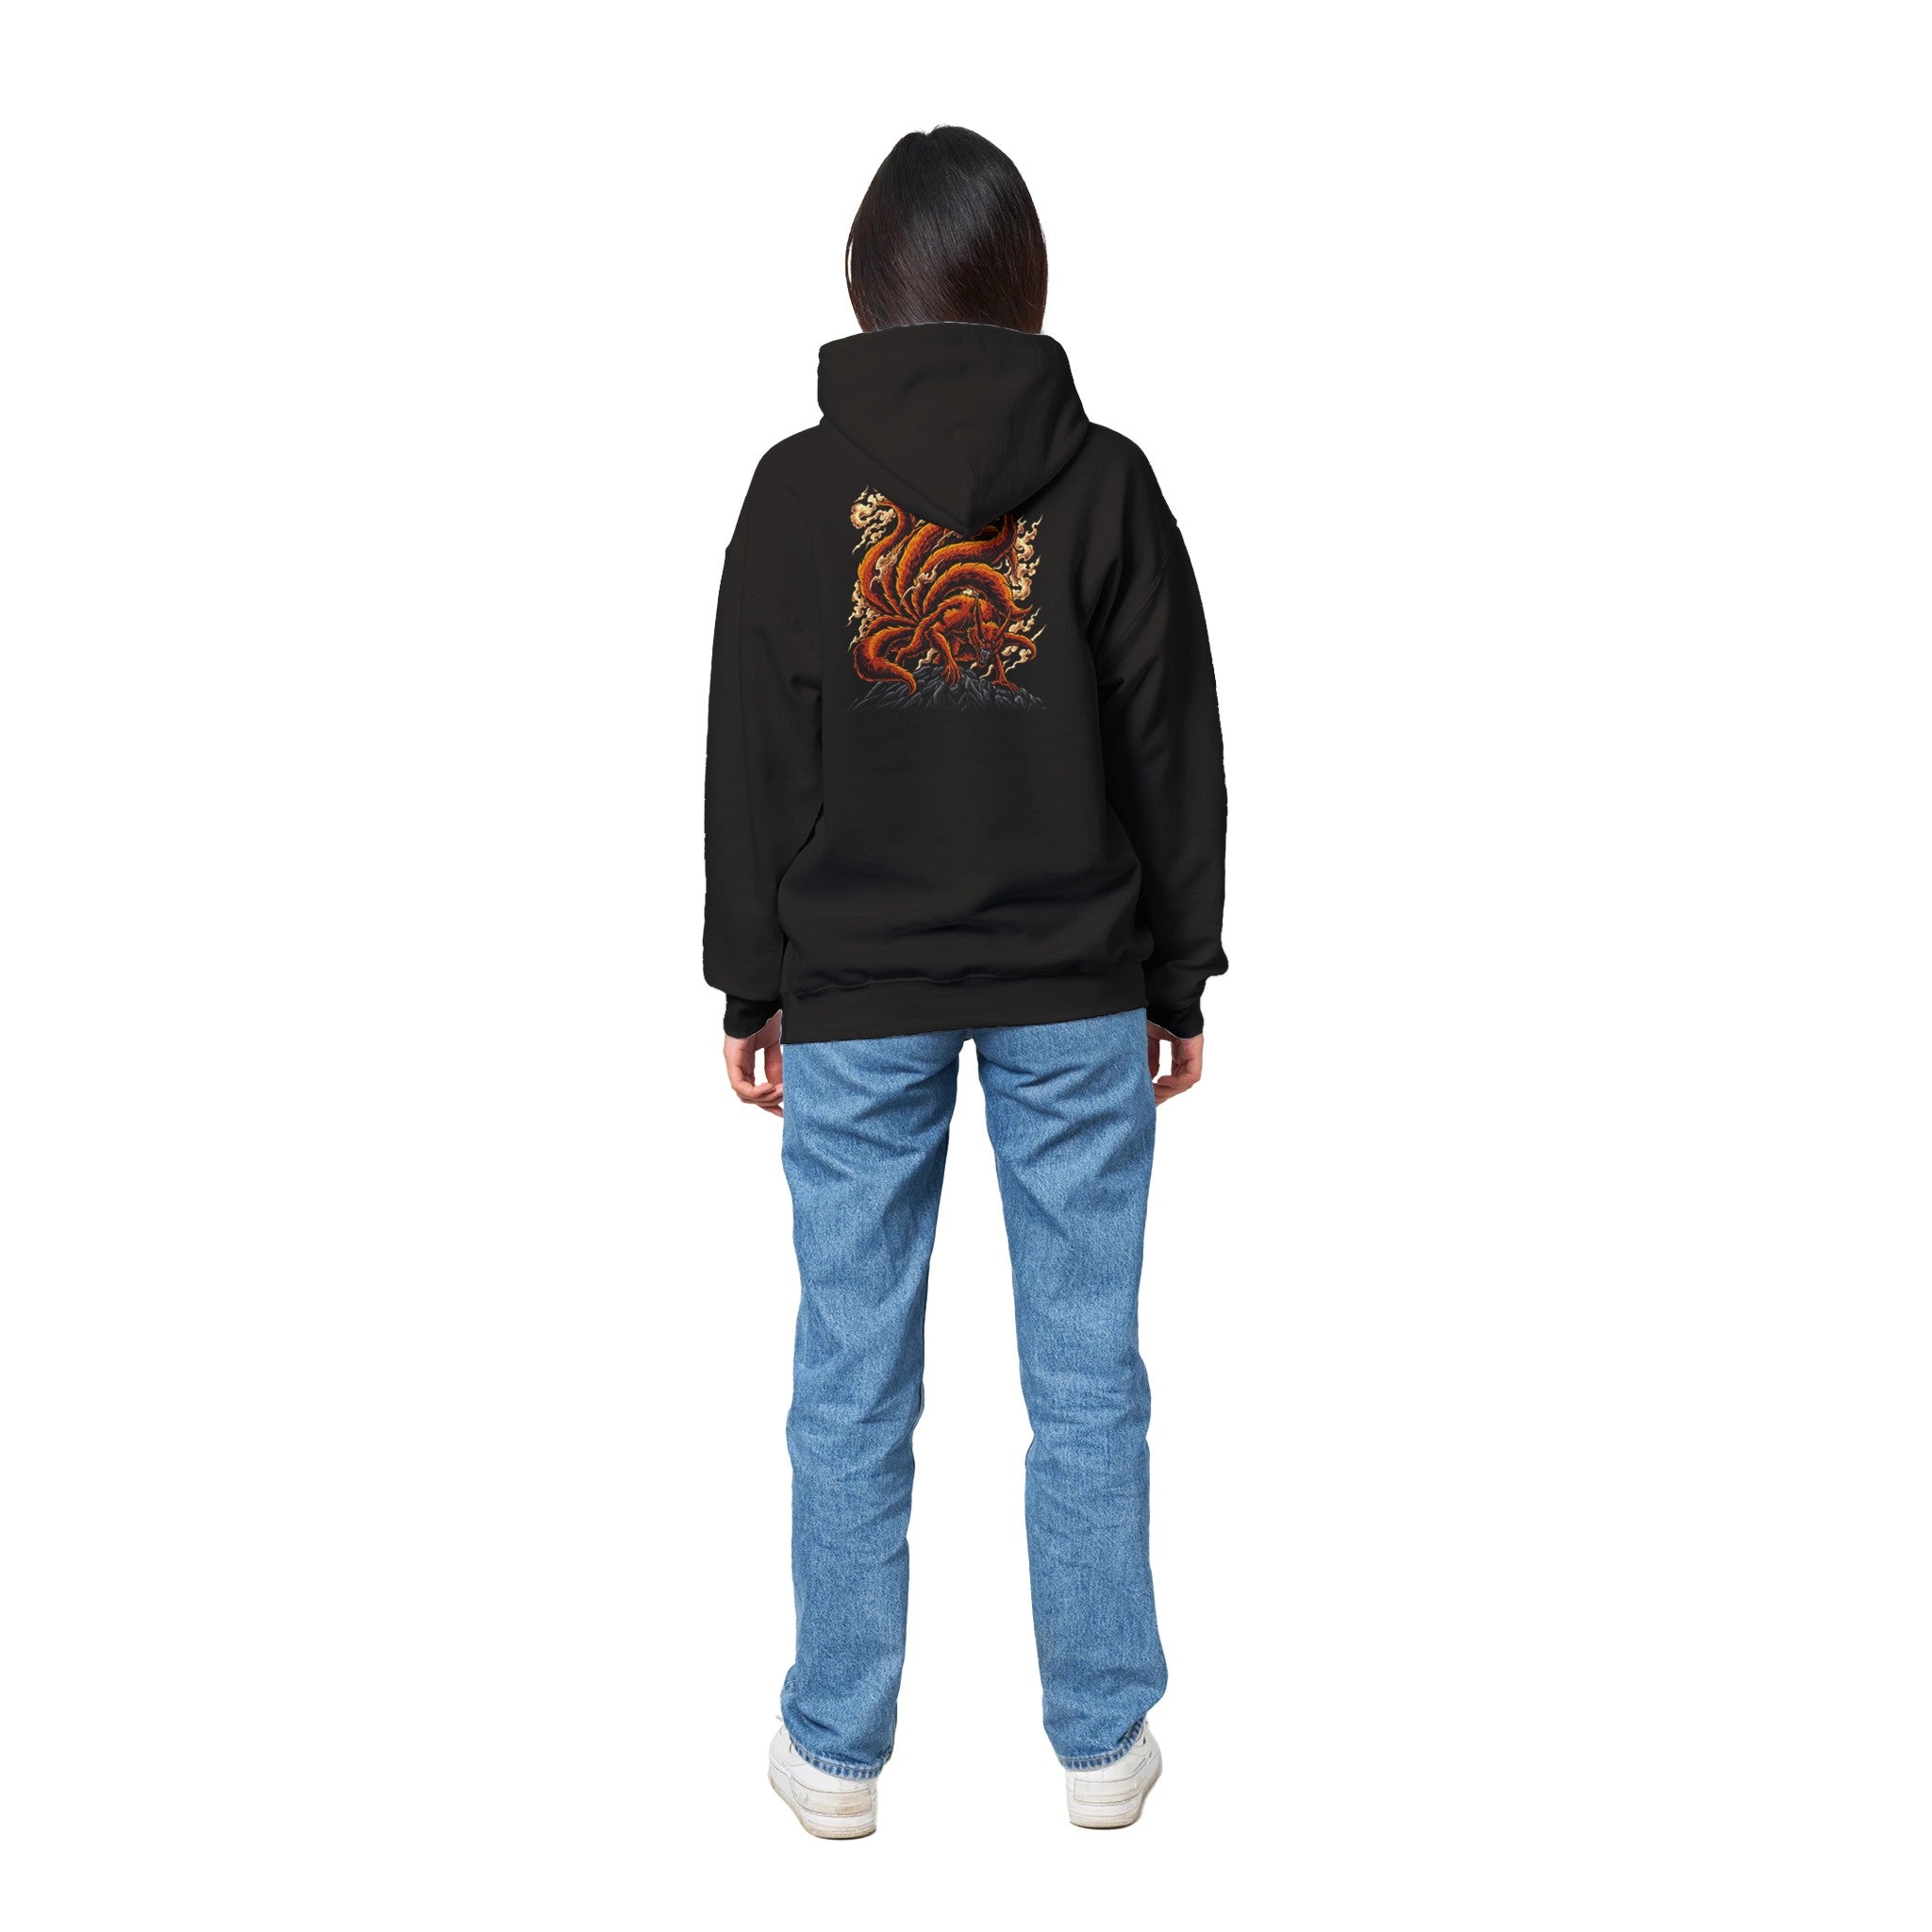 shop and buy Naruto, Kurama 9 tails anime clothing hoodie